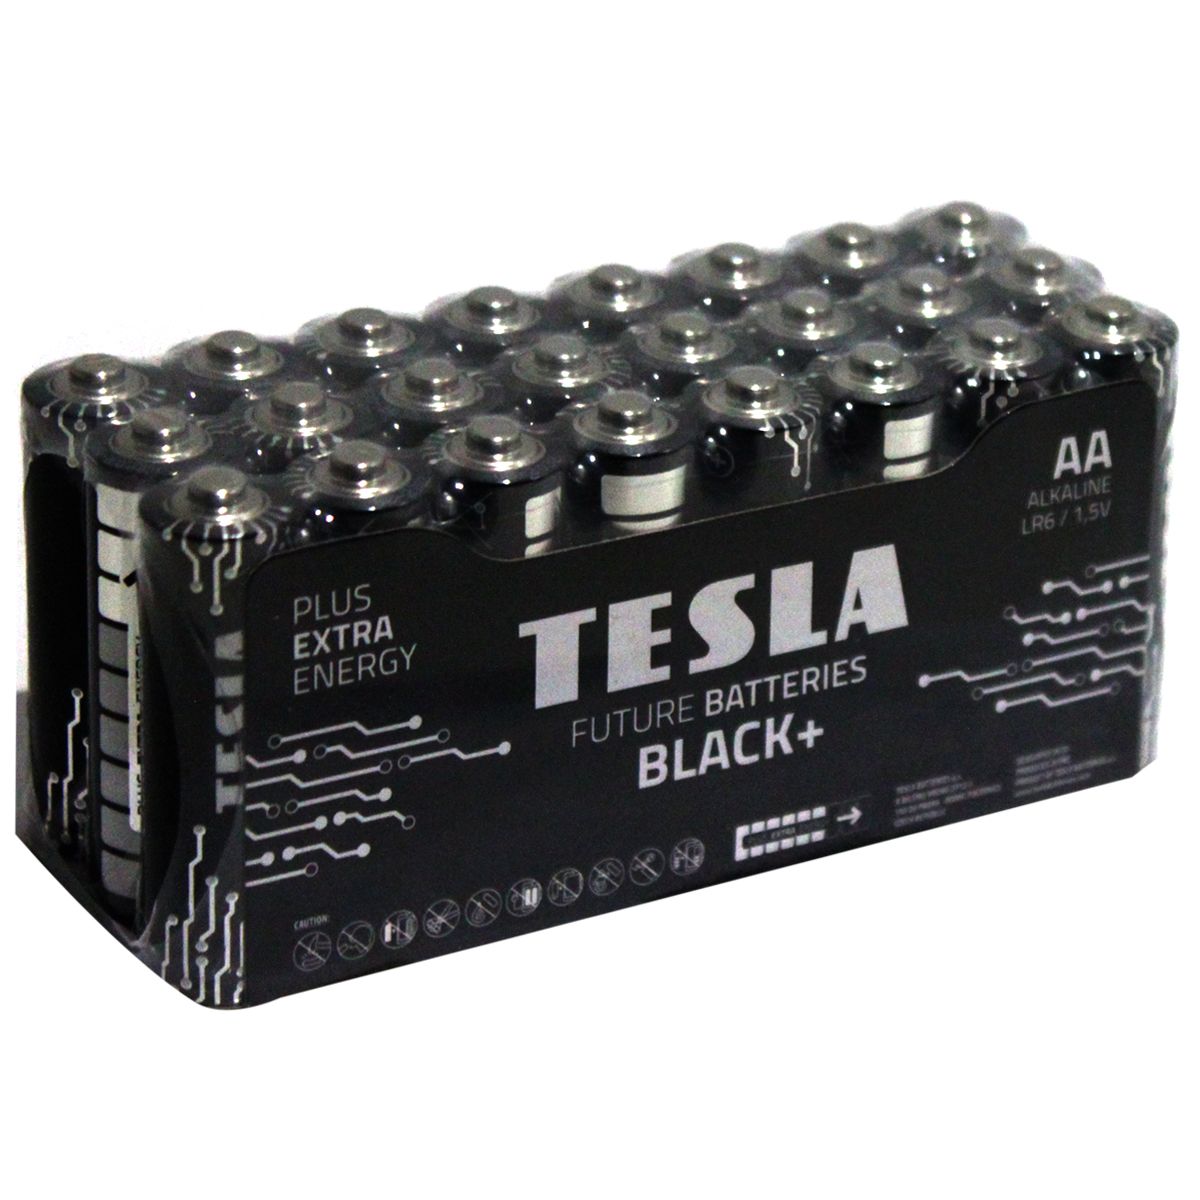 Первинні елементи та первинні батареї TESLA BATTERIES AA BLACK+ 24 MULTIPACK ( LR06 / SHRINK 24 шт. )